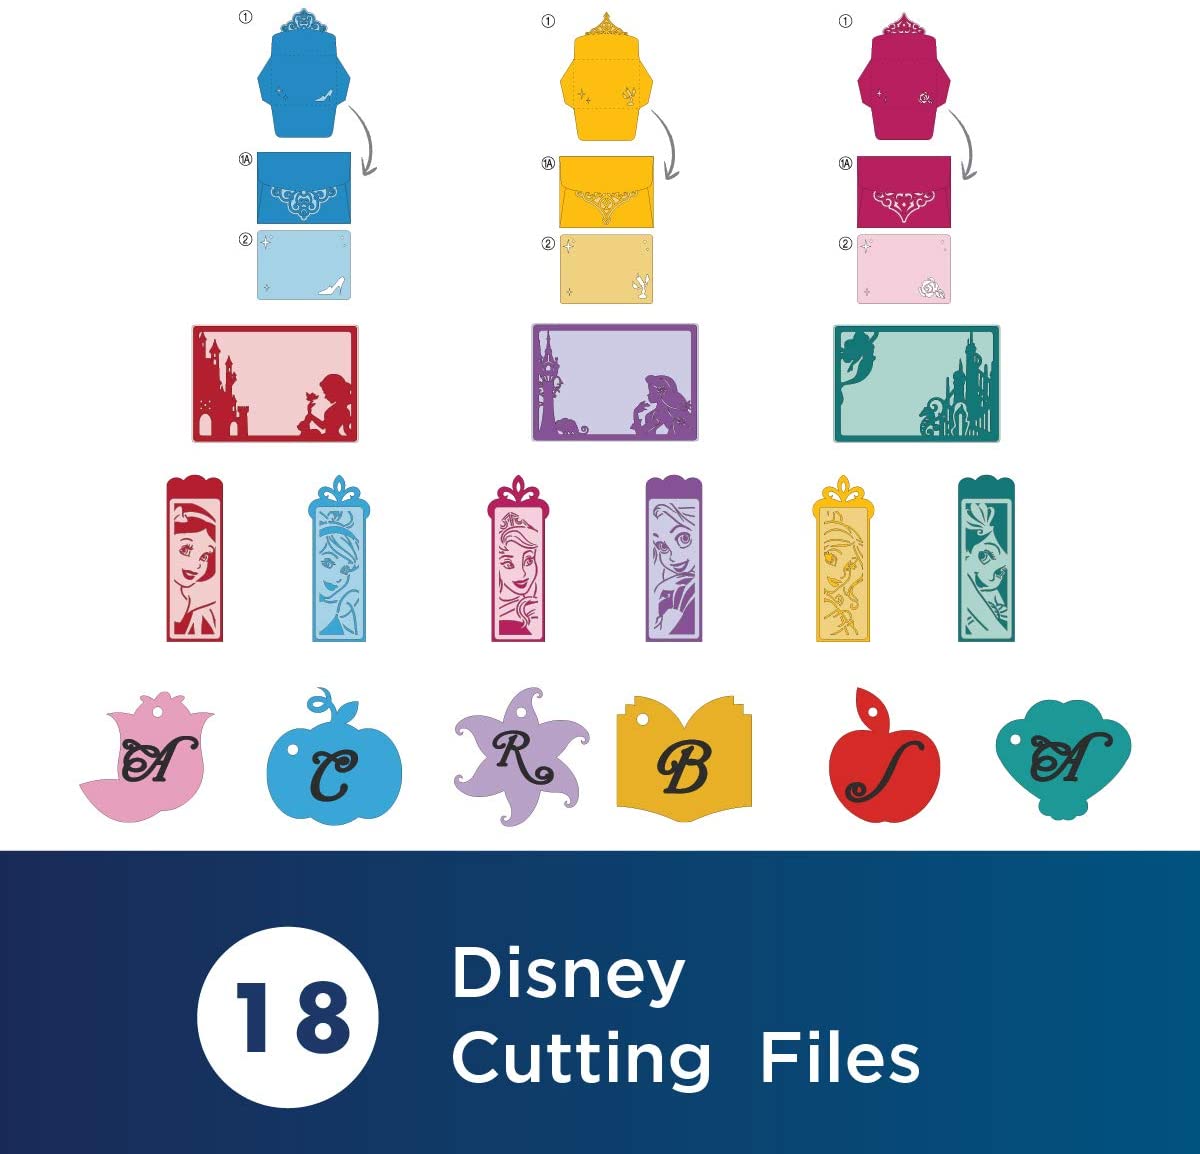 Cartilla de patrones Princesas Disney para cortadora Brother    [CADSNP02]